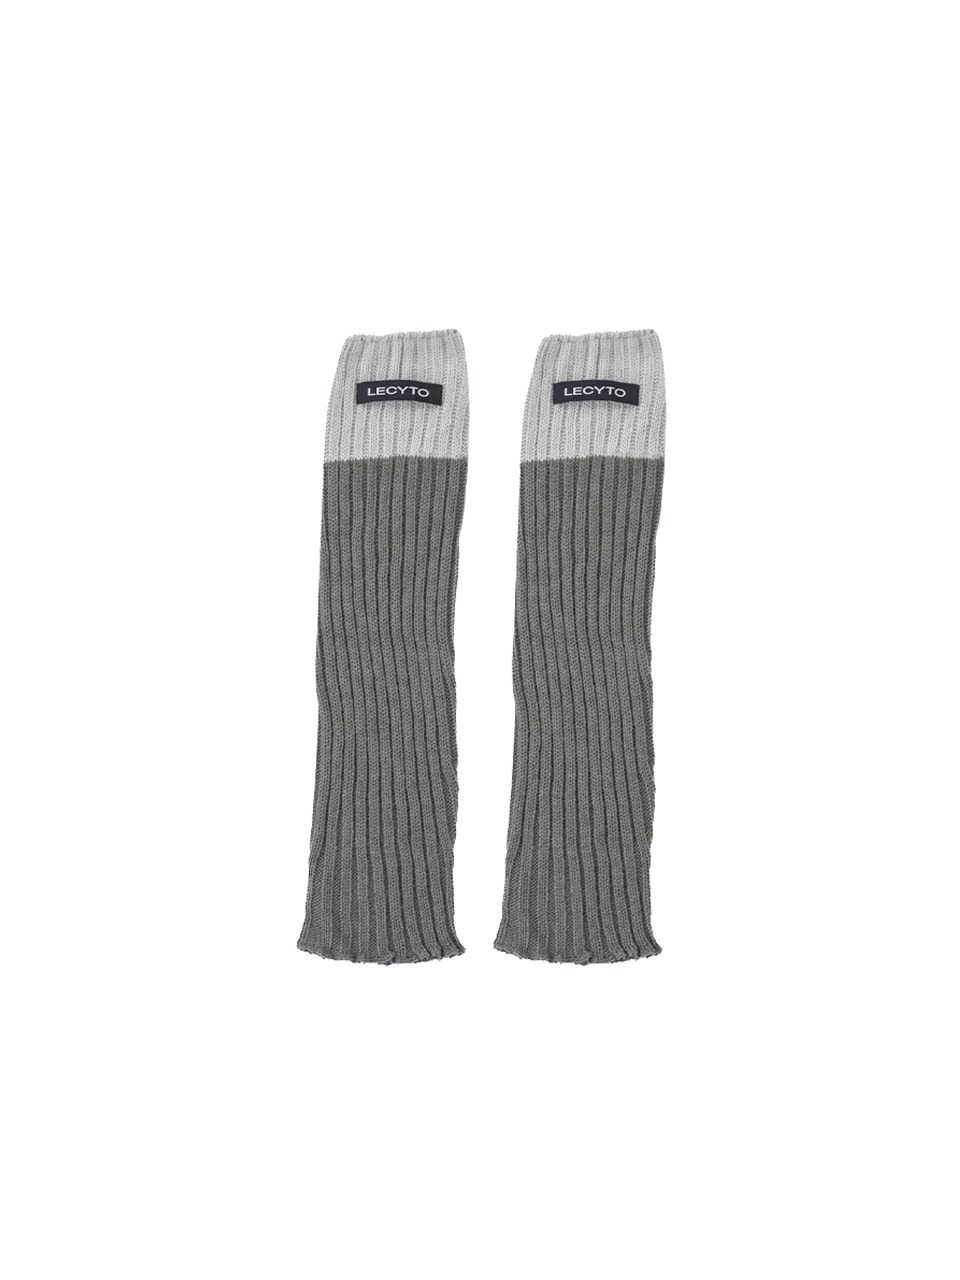 LECYTO - LONG KNIT COMBI LEG WARMER (CHARCOAL)